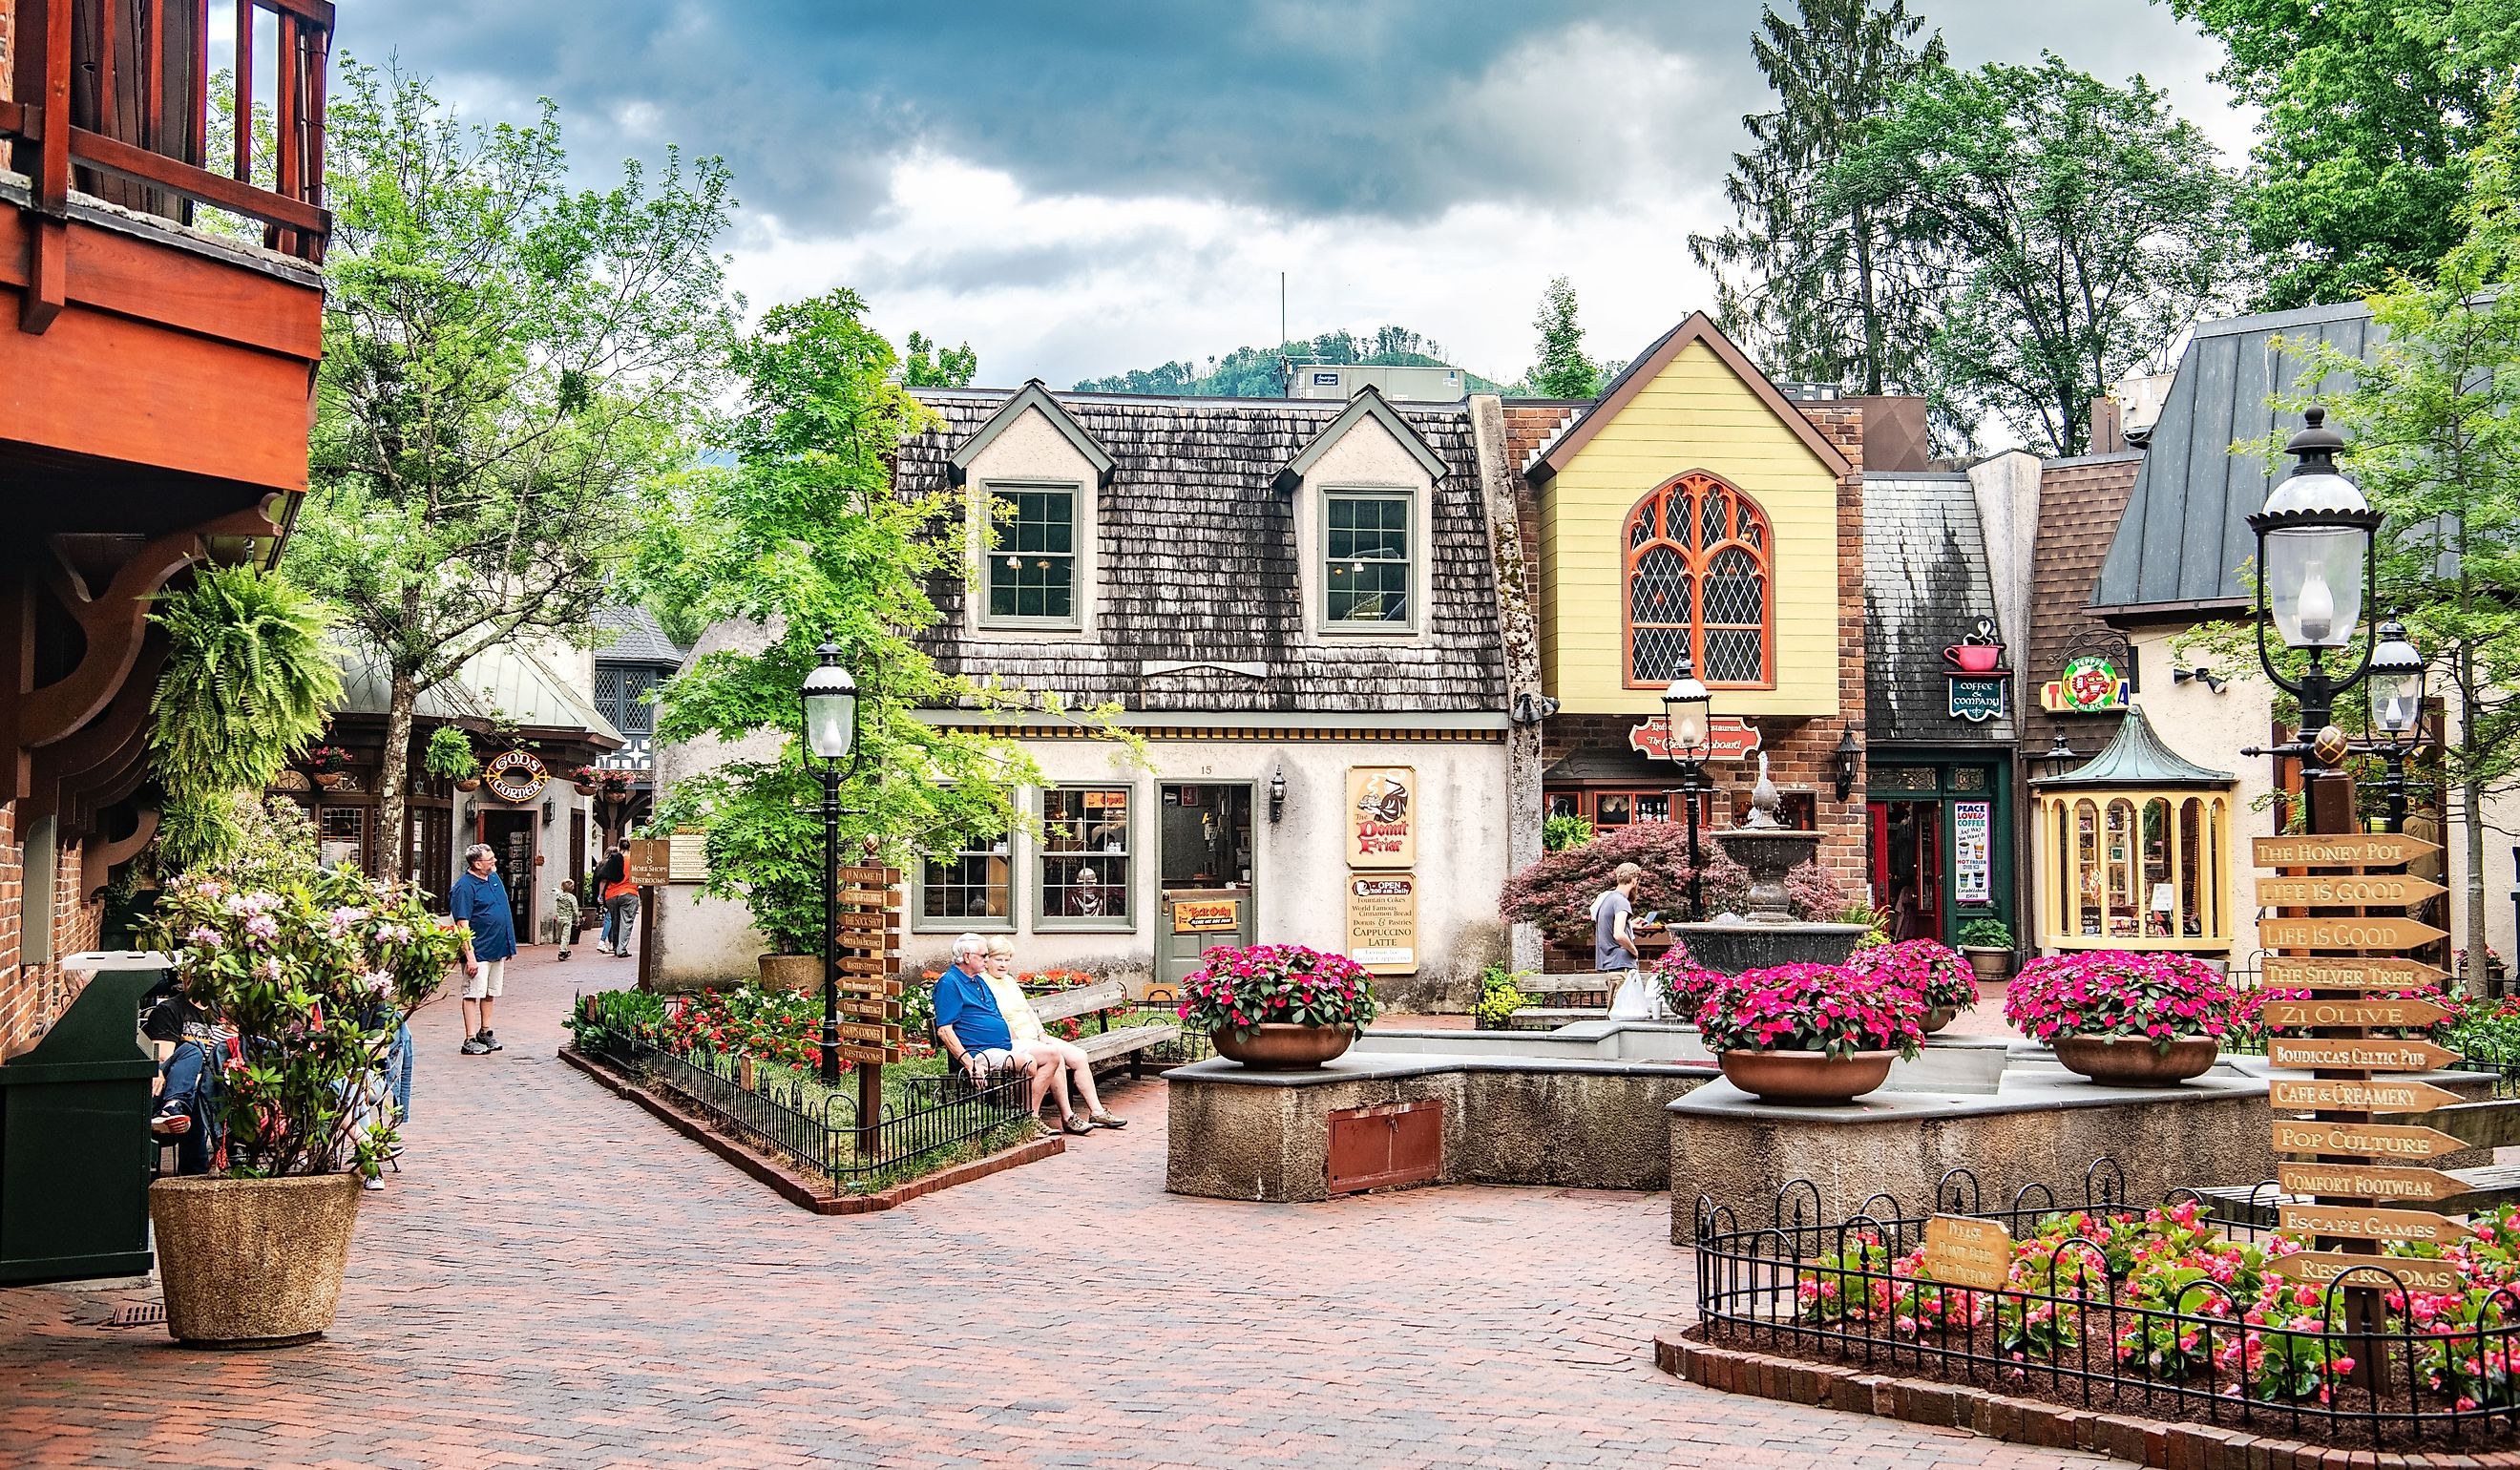 Amazing architecture of the tourist city of Gatlinburg in Tennessee. Editorial credit: Kosoff / Shutterstock.com